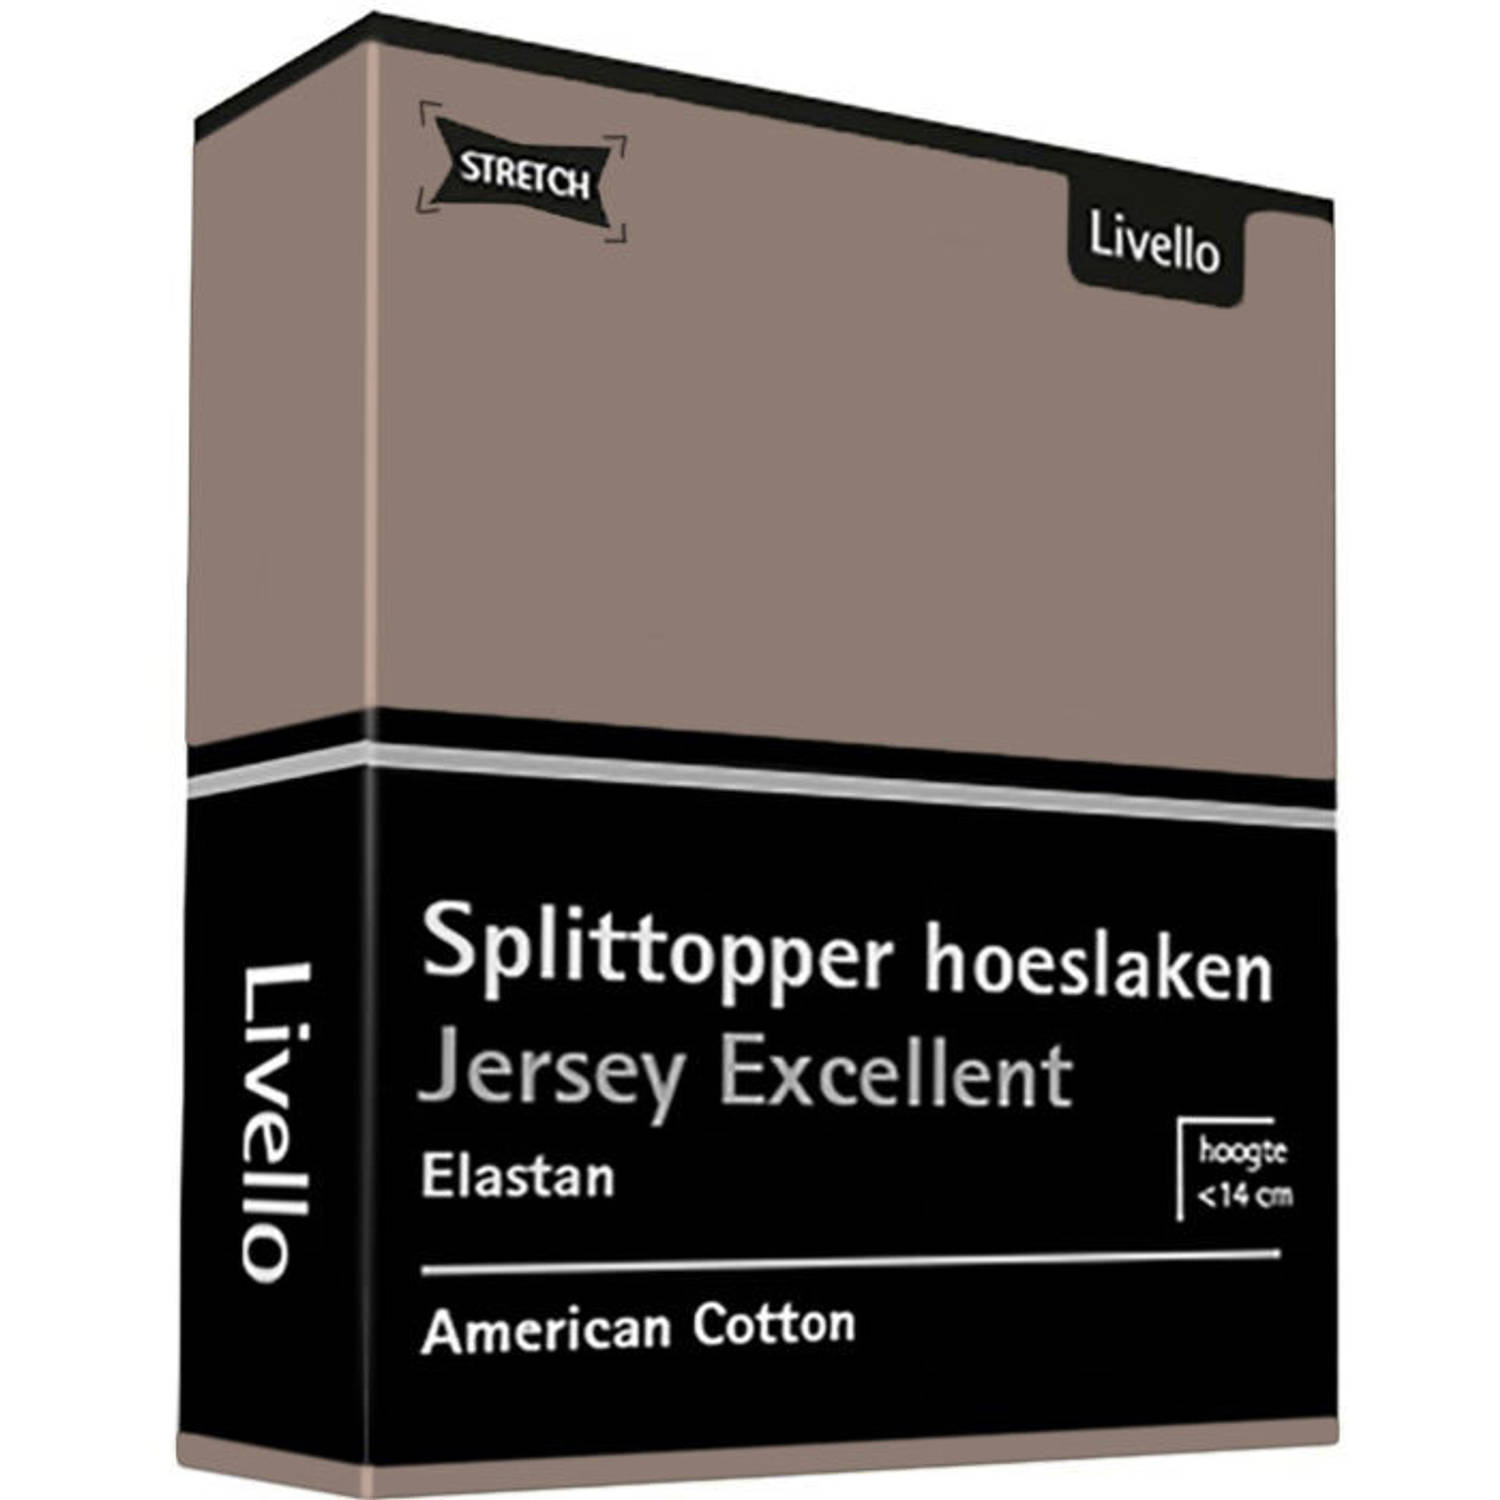 Livello Hoeslaken Splittopper Jersey Excellent - 140x200